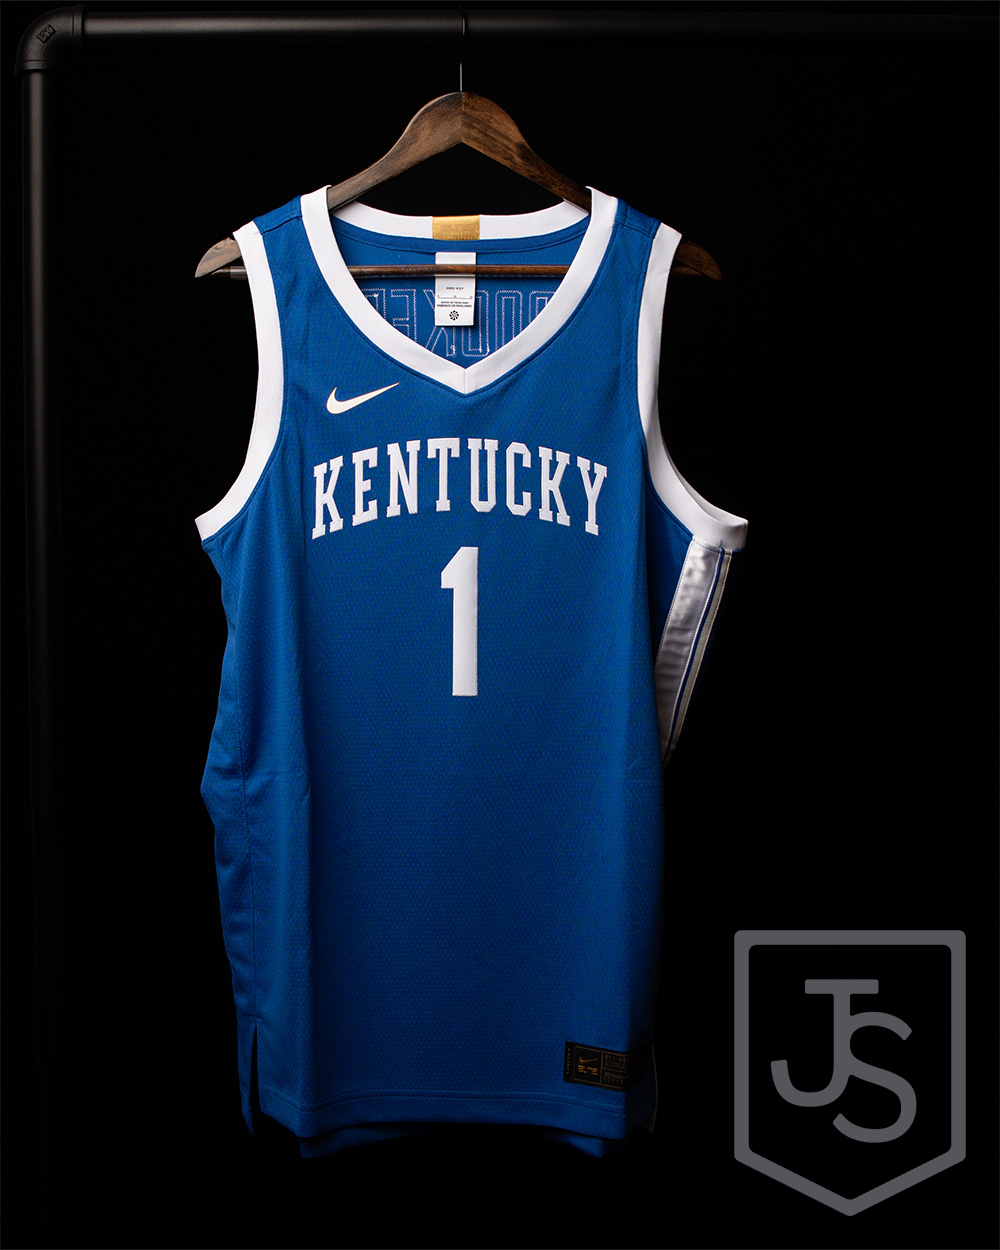 authentic kentucky basketball jersey